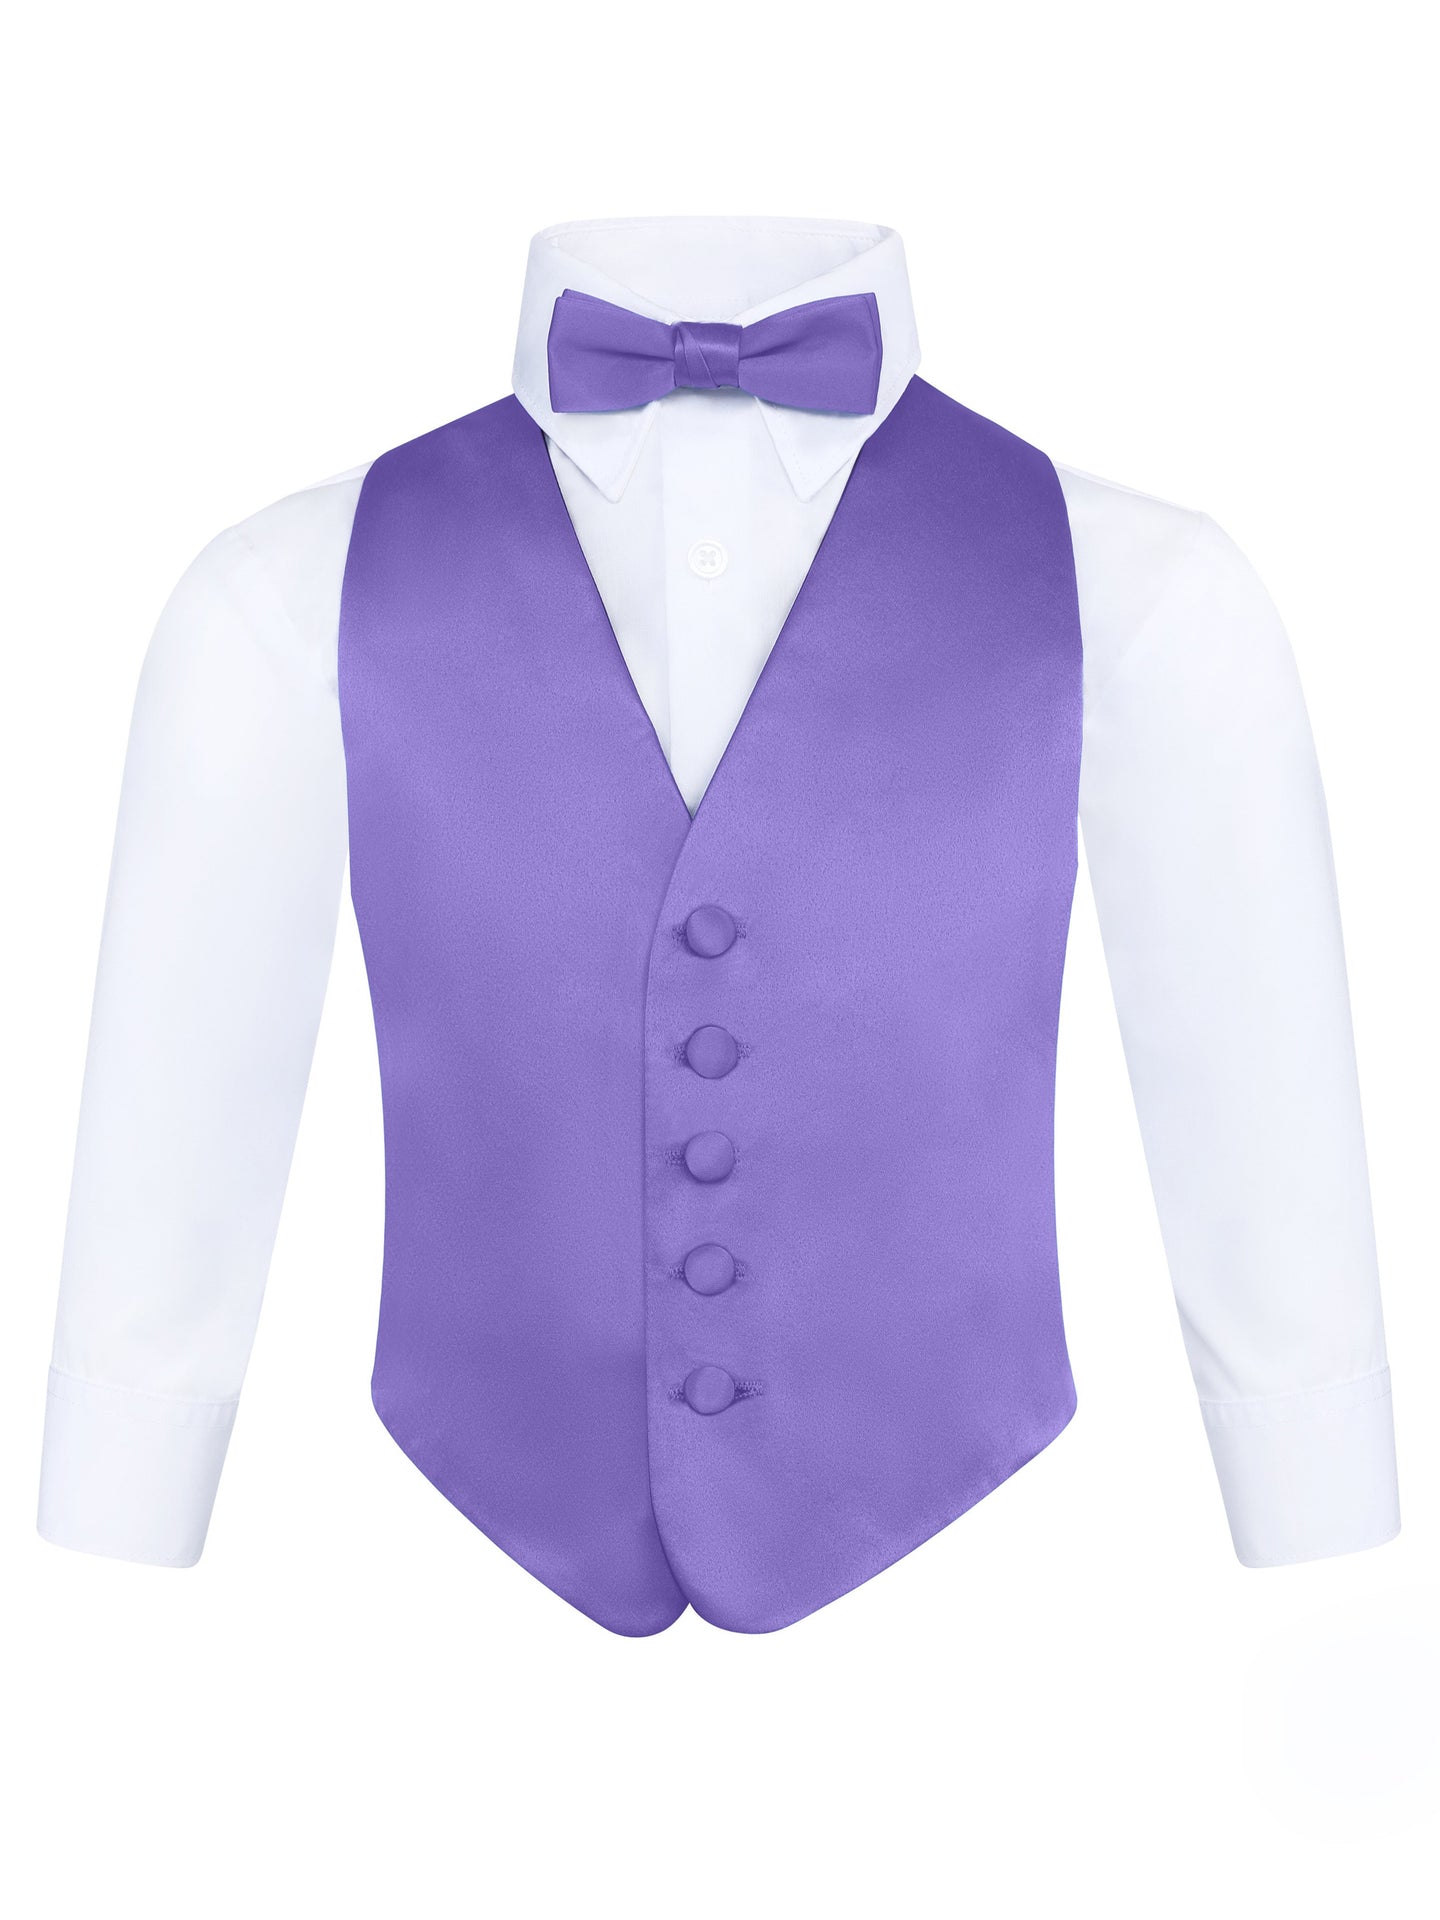 S.H. Churchill & Co. Boy's 3 Piece Purple Backless Formal Vest Set - Includes Vest, Bow Tie, Pocket Square for Tuxedo or Suit